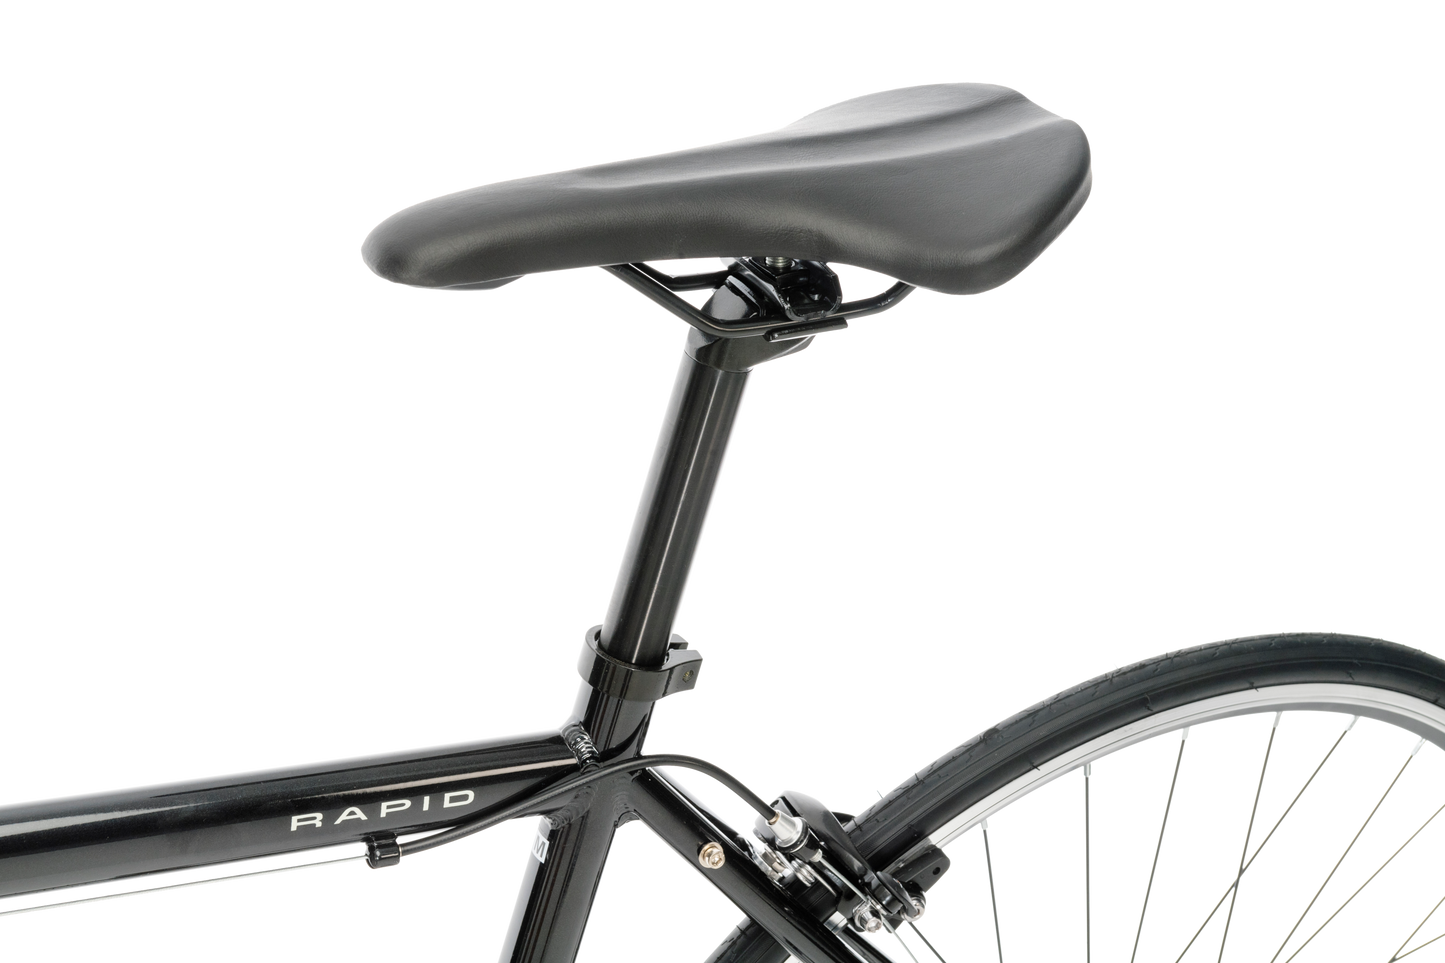 Rapid Flatbar Road Bike in Black  showing adjustable seatpost from Reid Cycles Australia